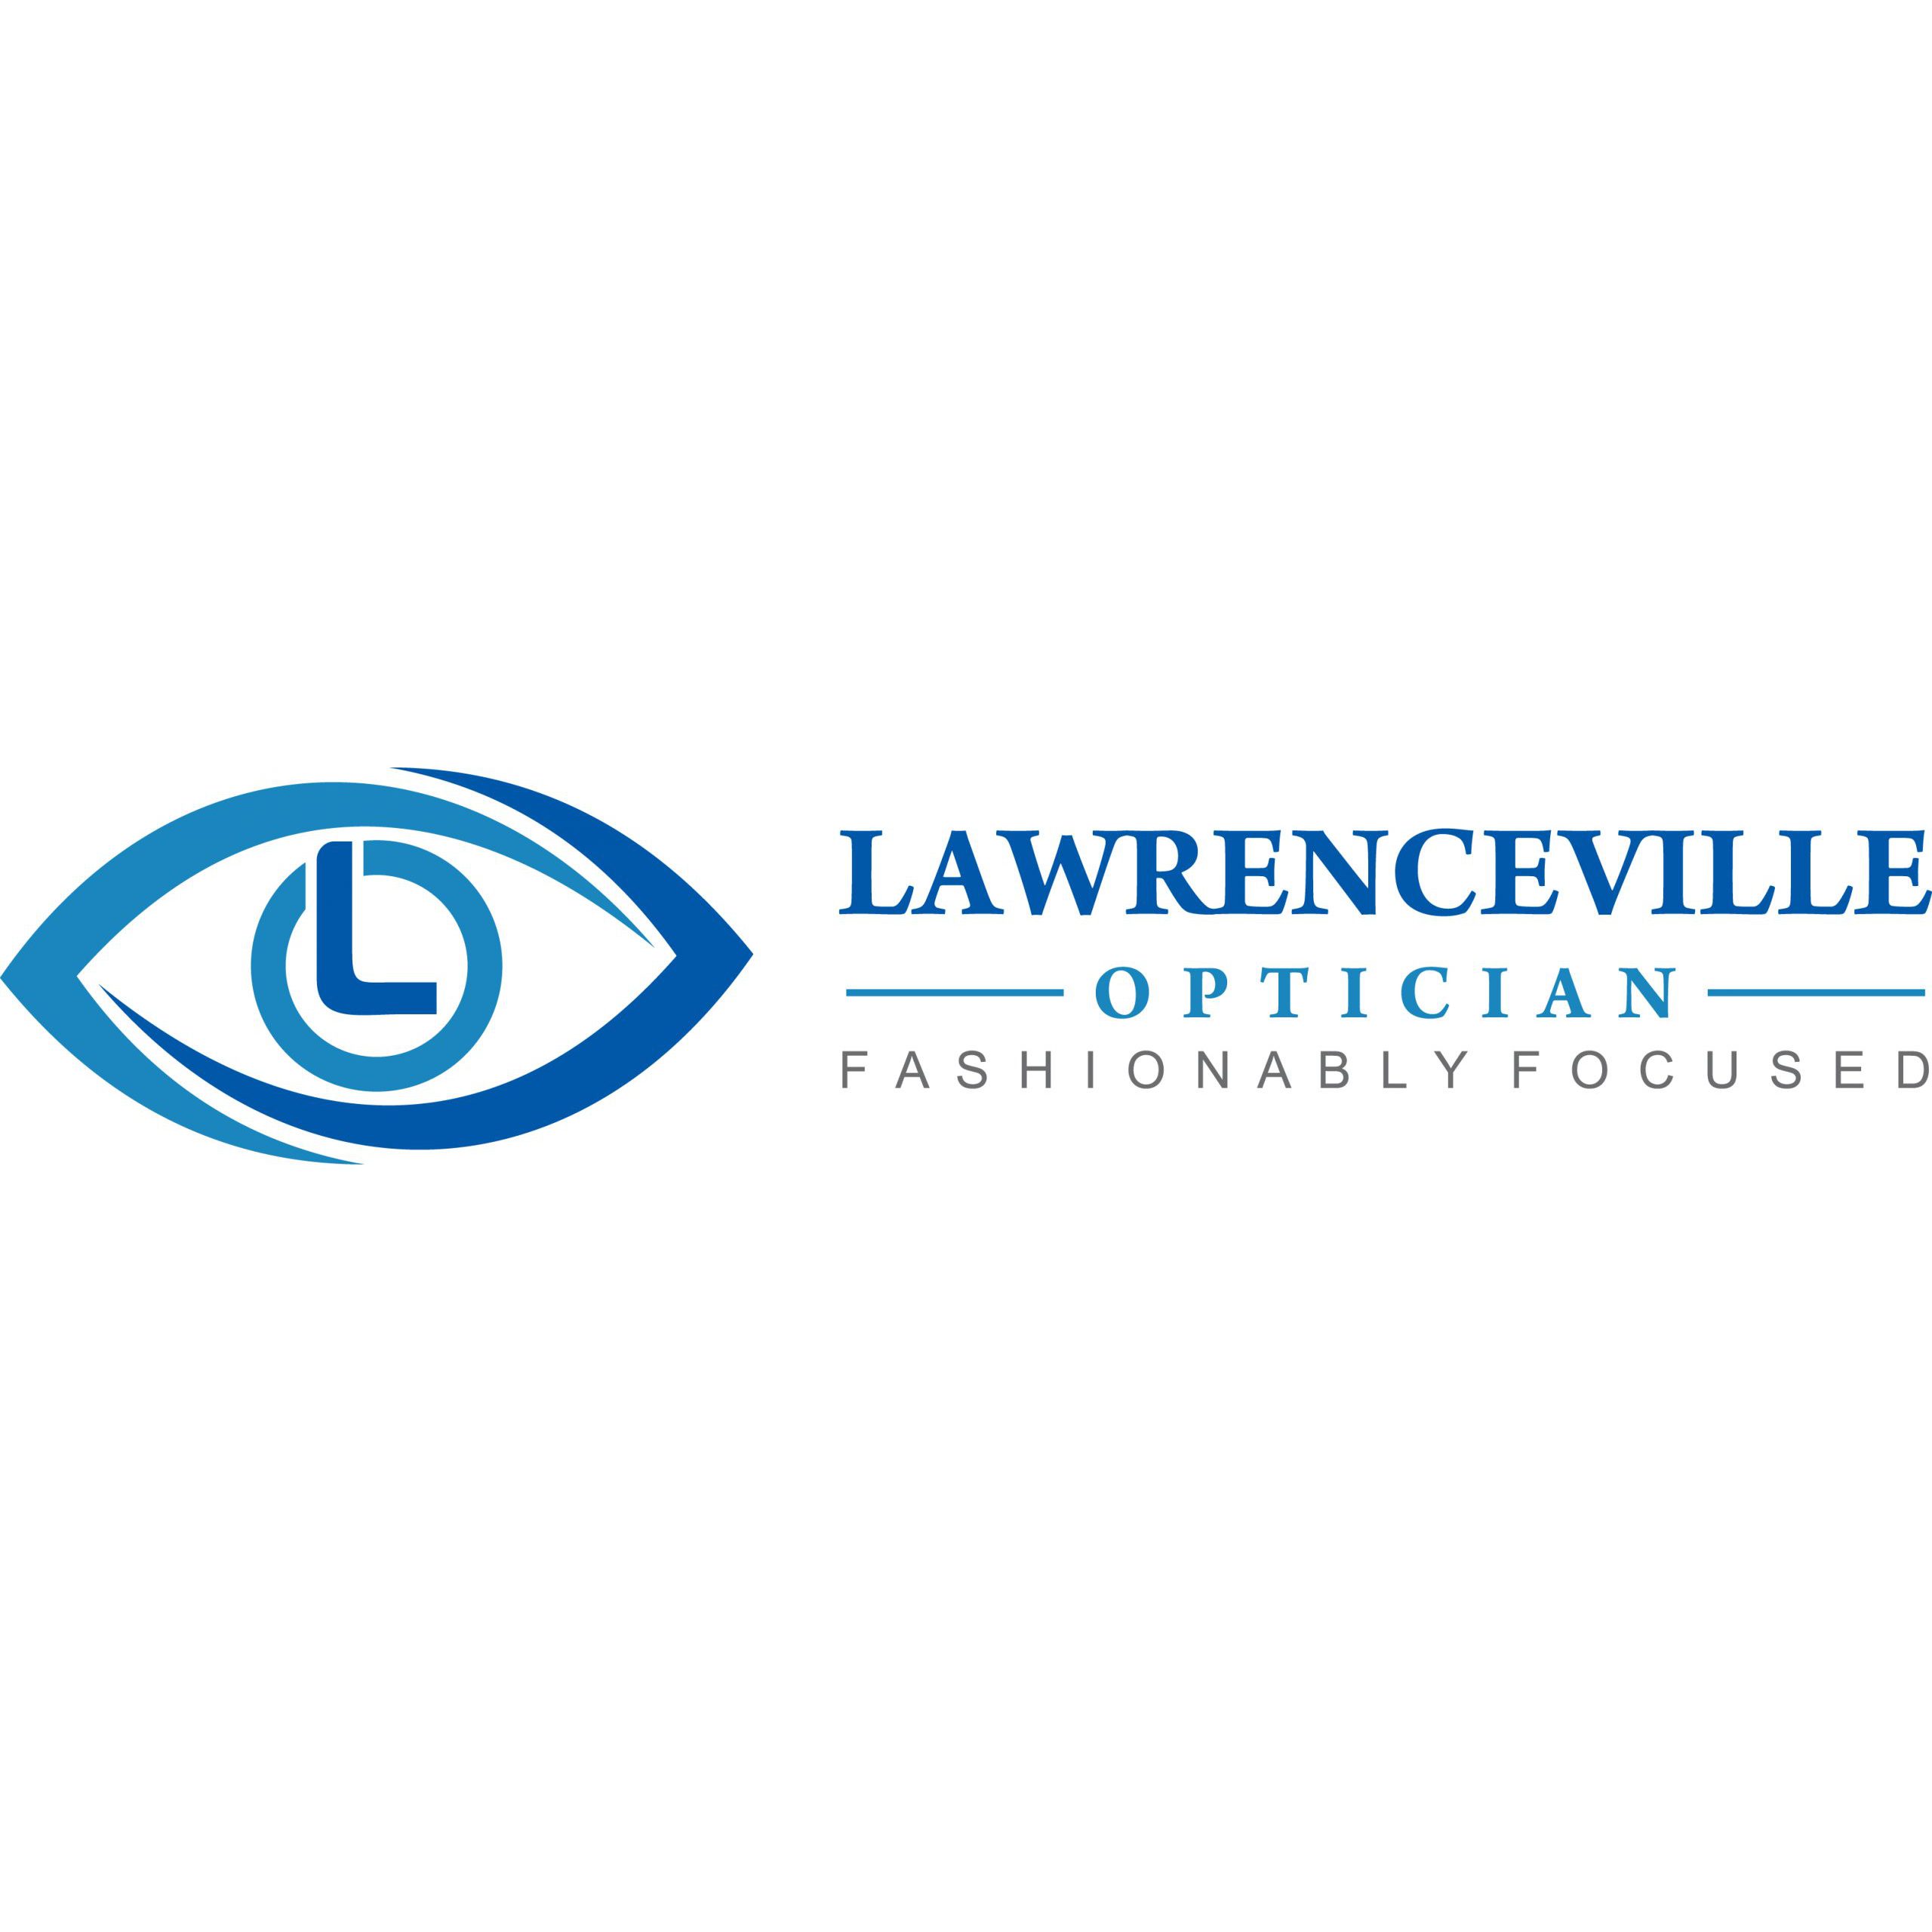 Lawrenceville Optician - Lawrence Township, NJ 08648 - (609)896-2521 | ShowMeLocal.com